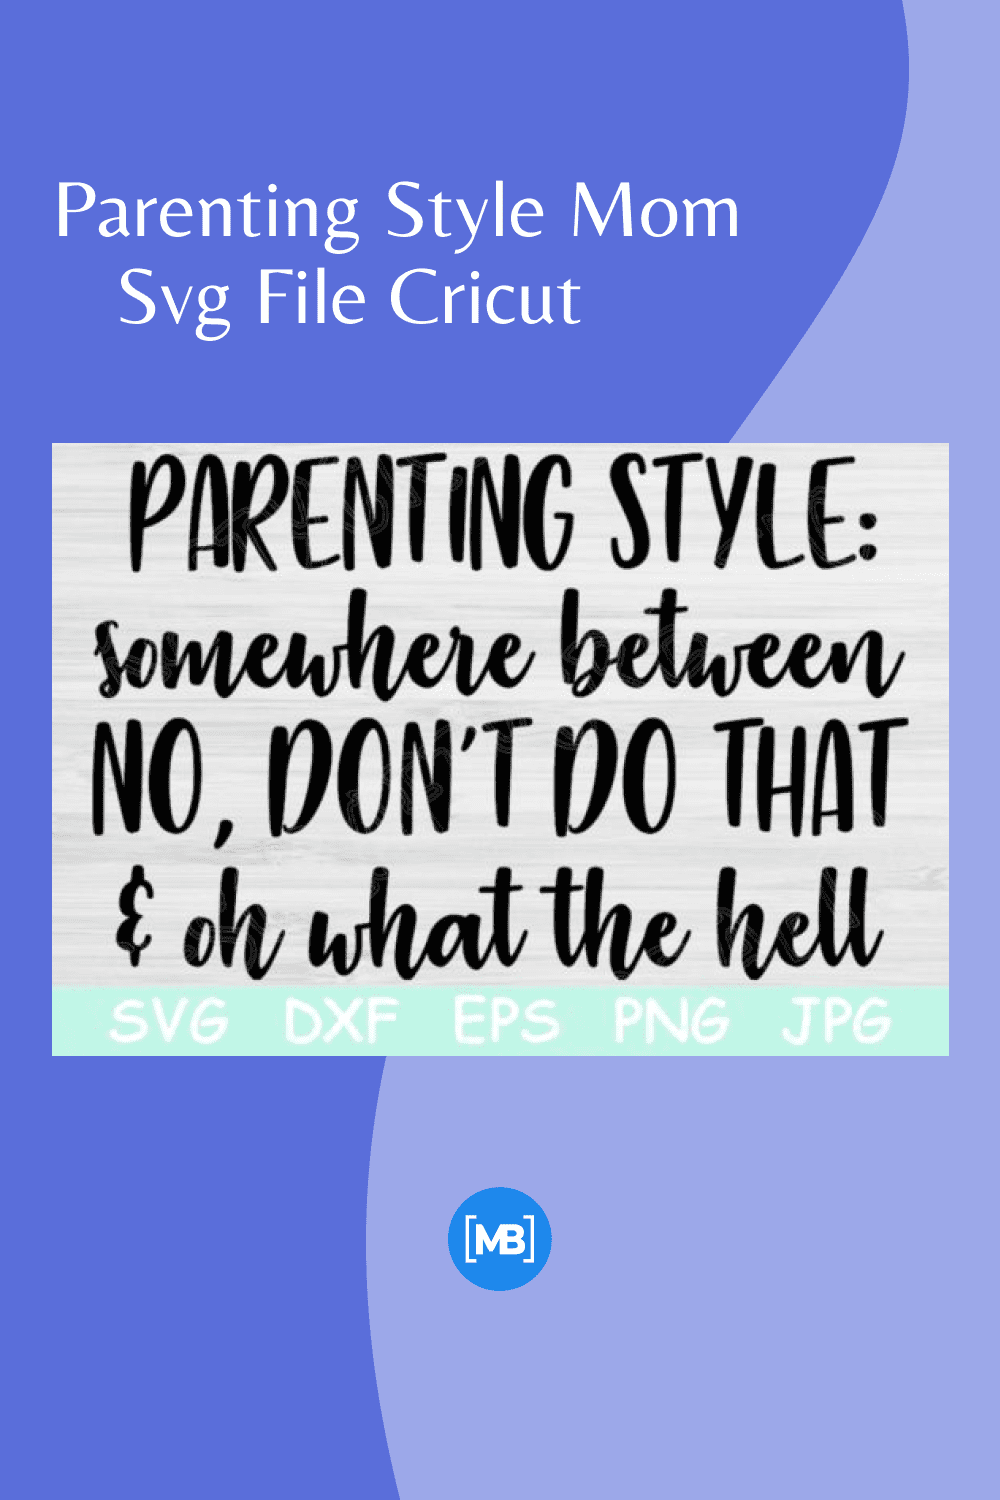 Parenting Style Mom Svg File Cricut.